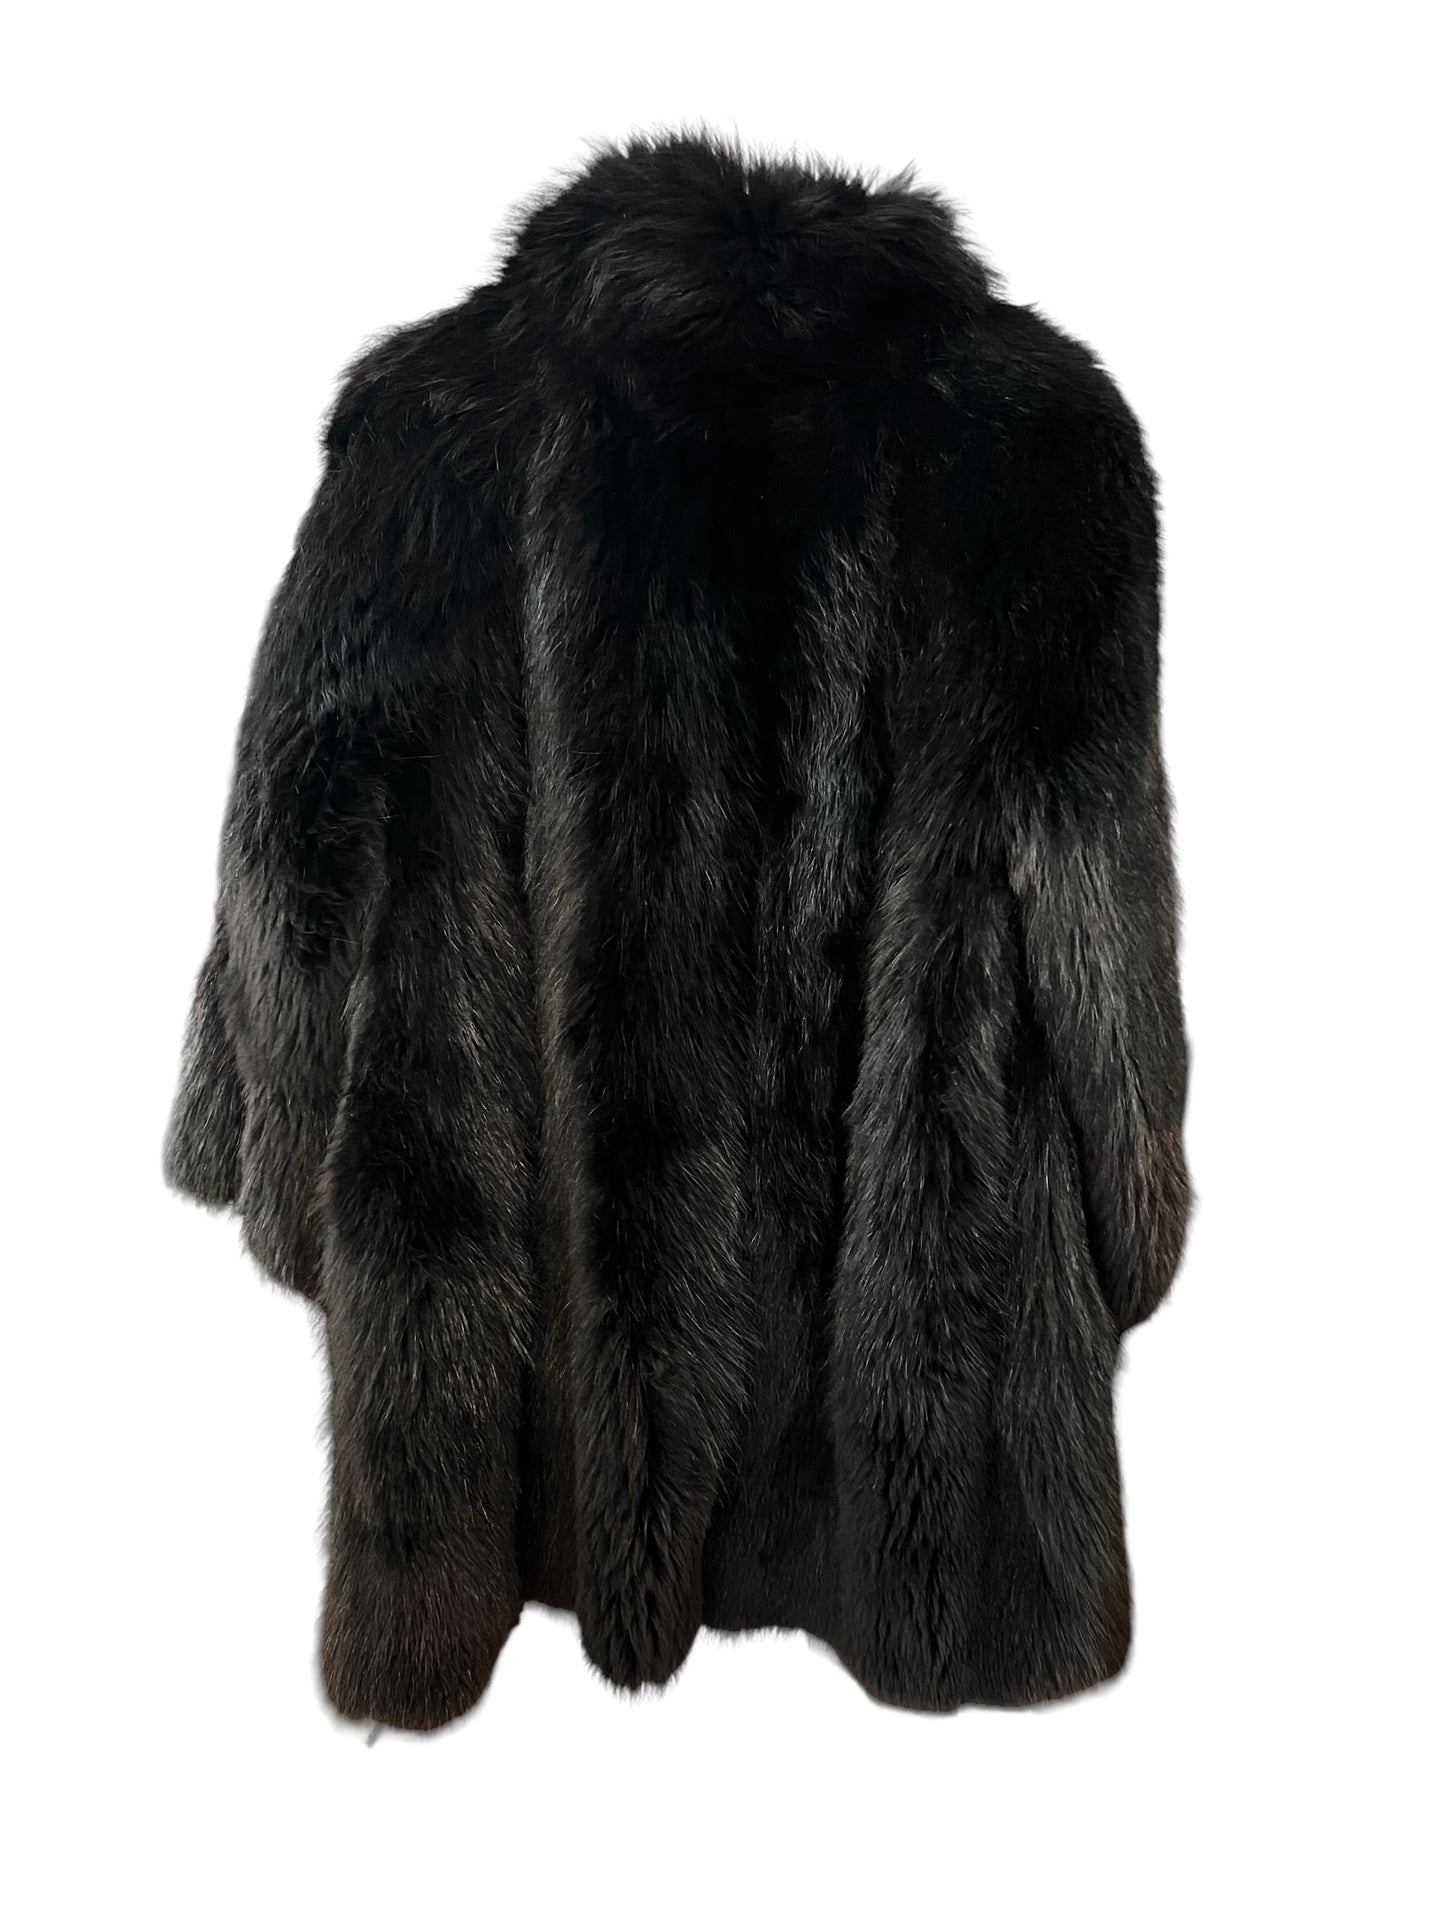 Black Fox Coat